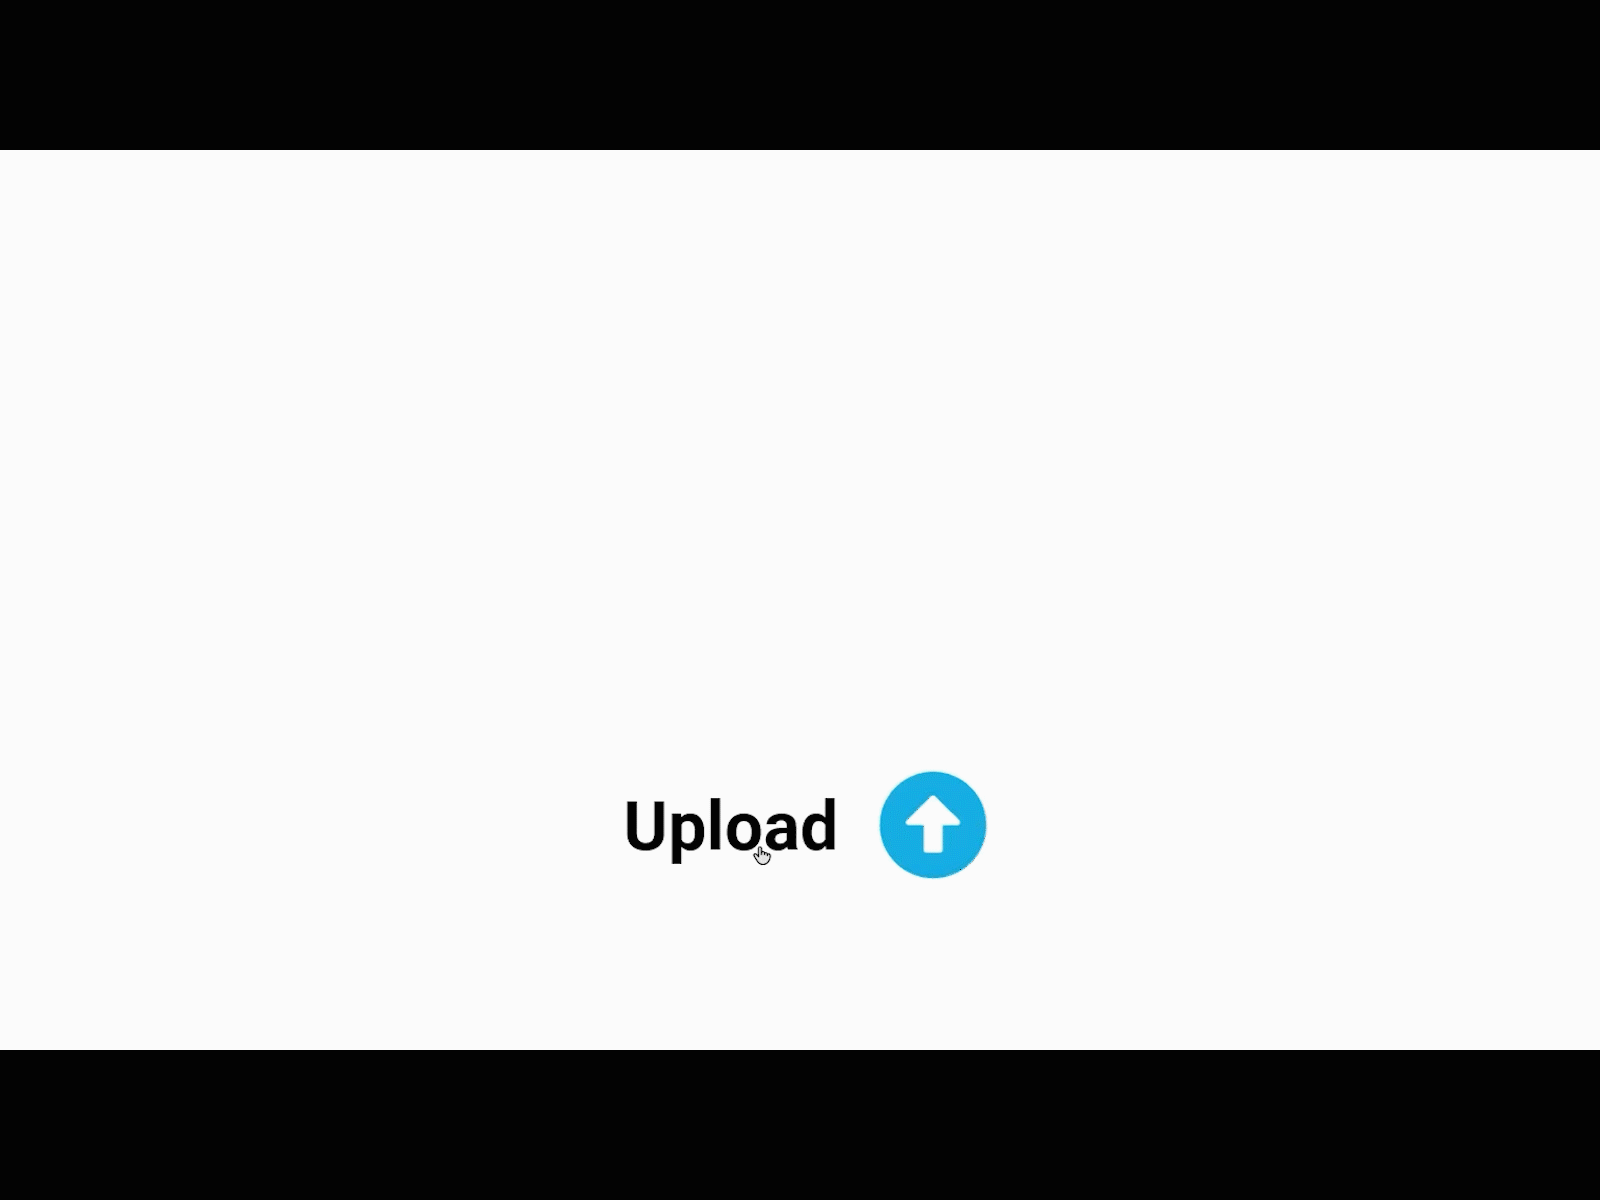 Simple Upload Transition animation icon ui ux website